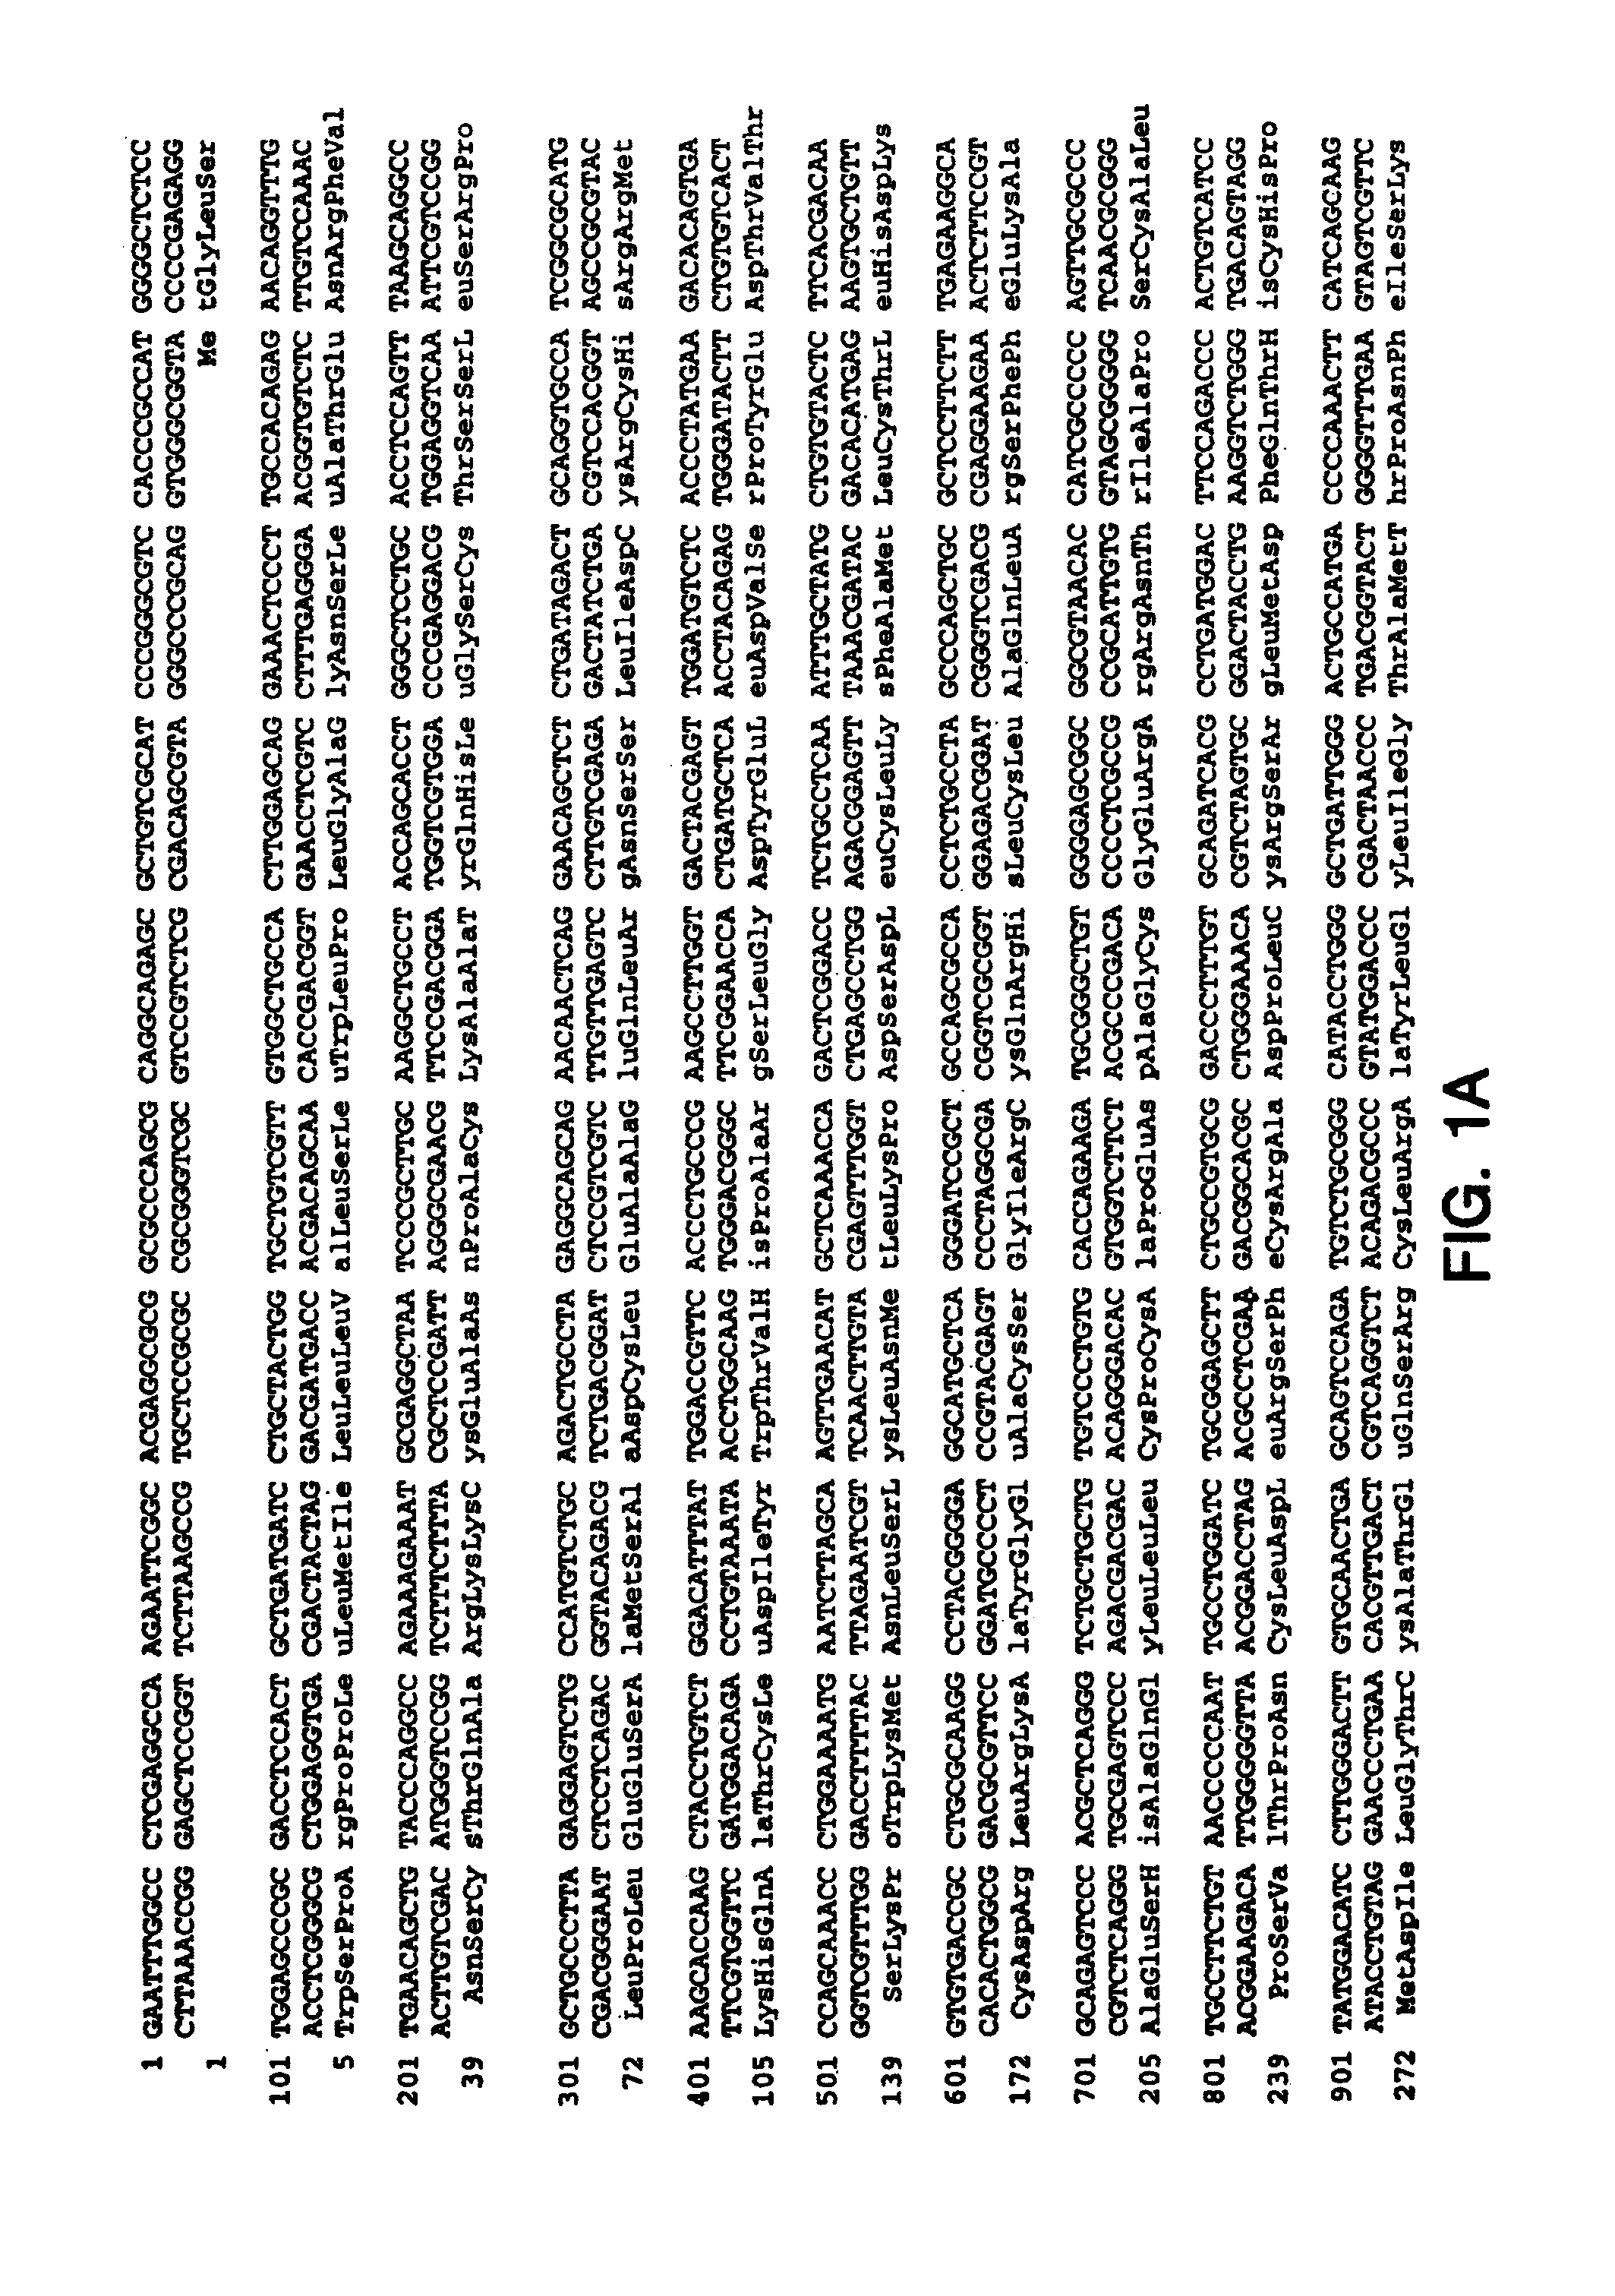 Polynucleotides encoding GFRα3